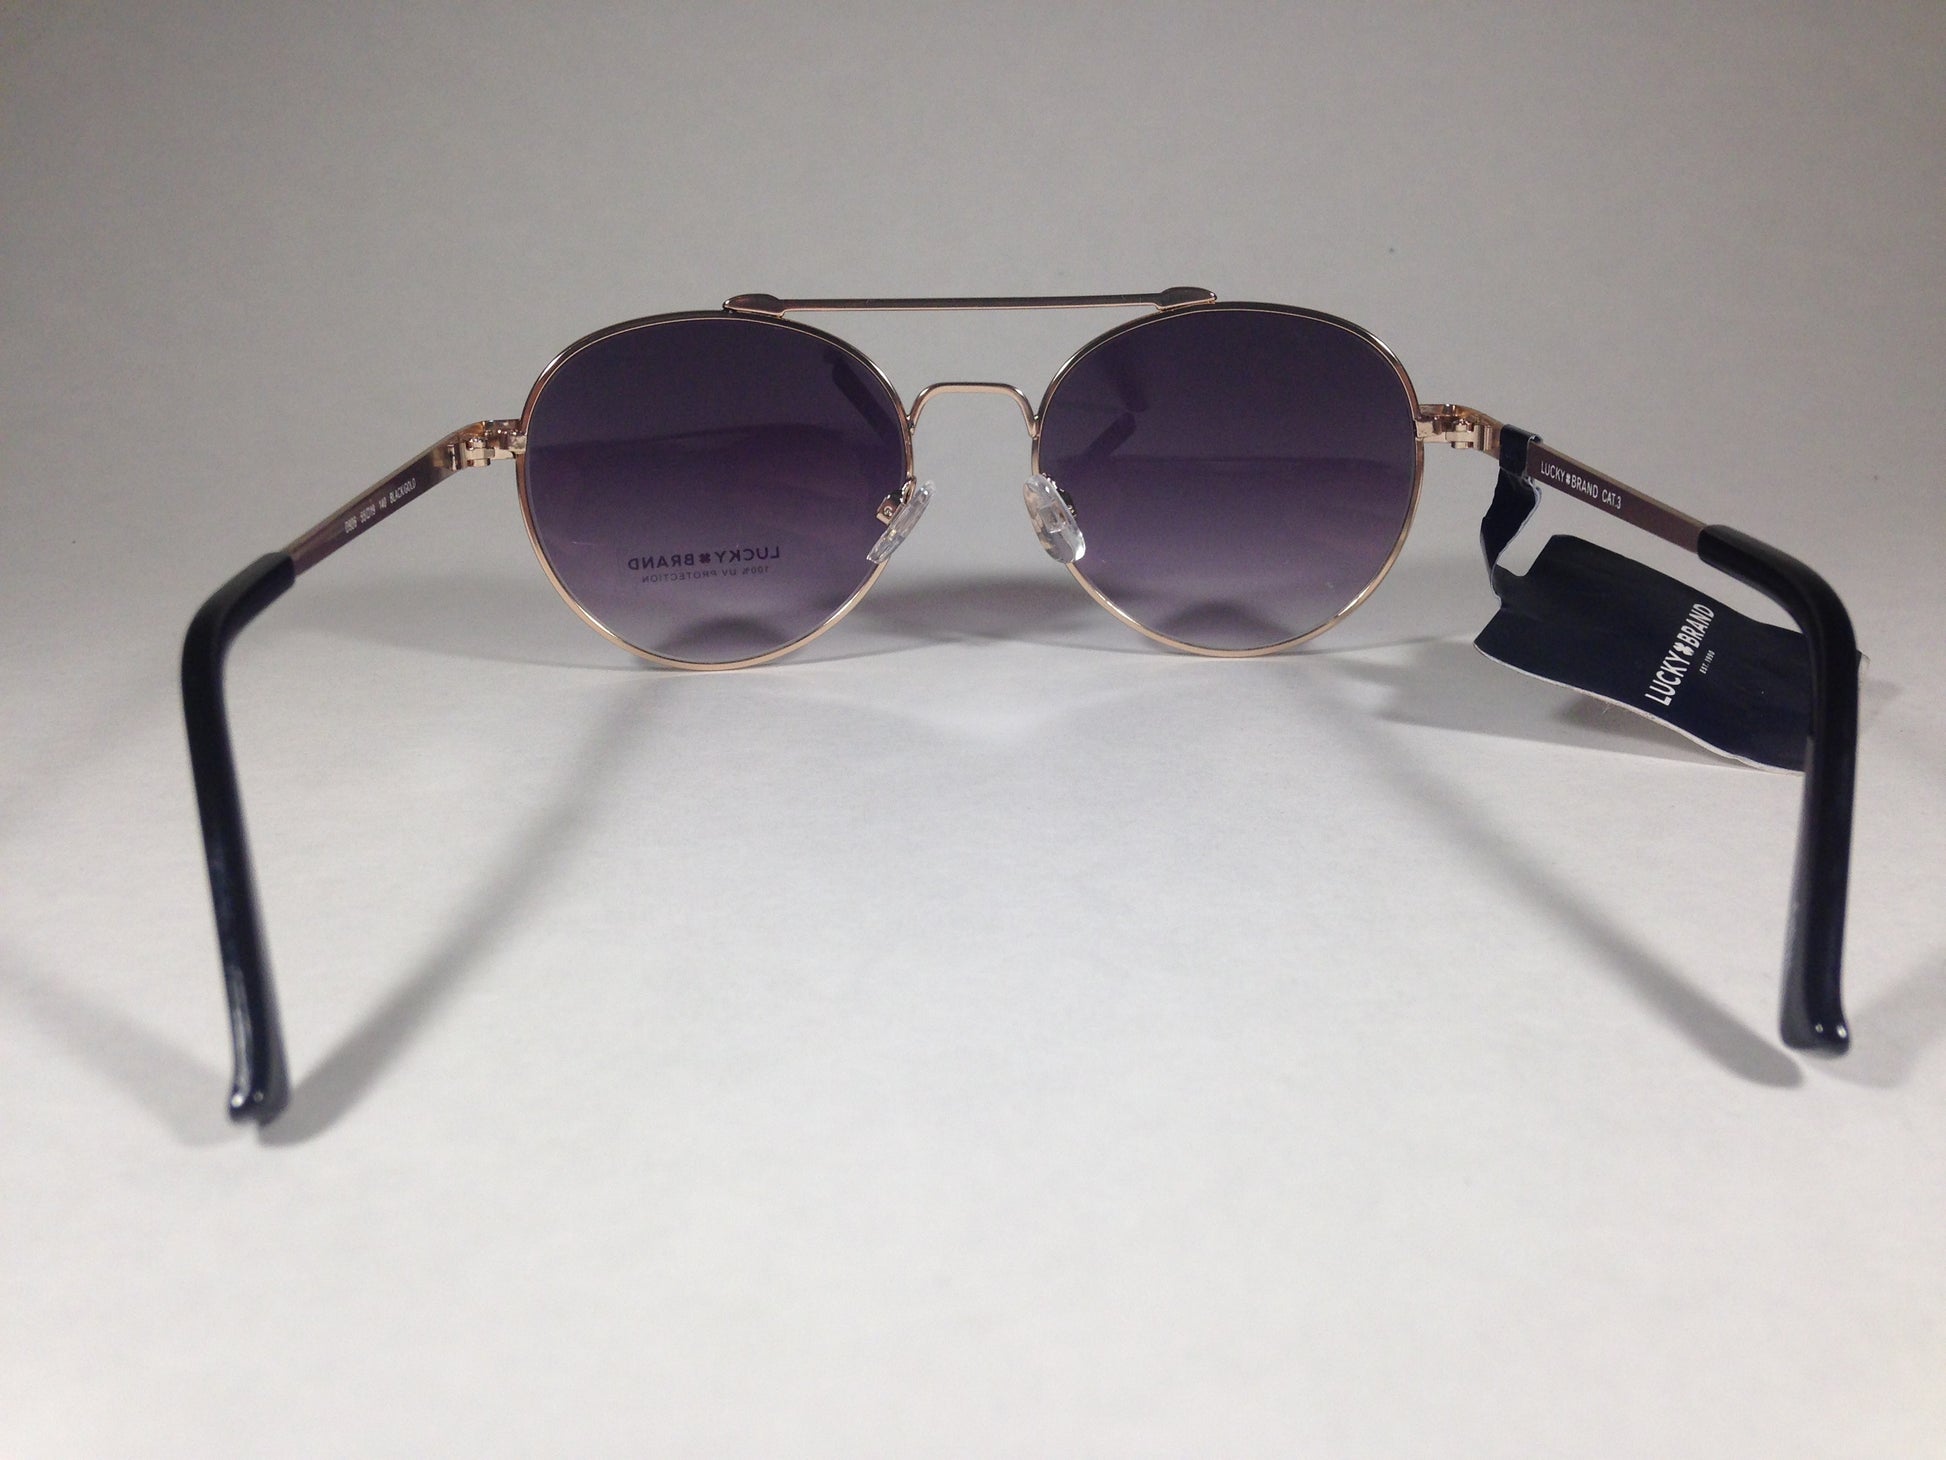 Lucky Brand Womens Round Aviator Sunglasses D926 Gold Black Gray Gradient Lens - Sunglasses